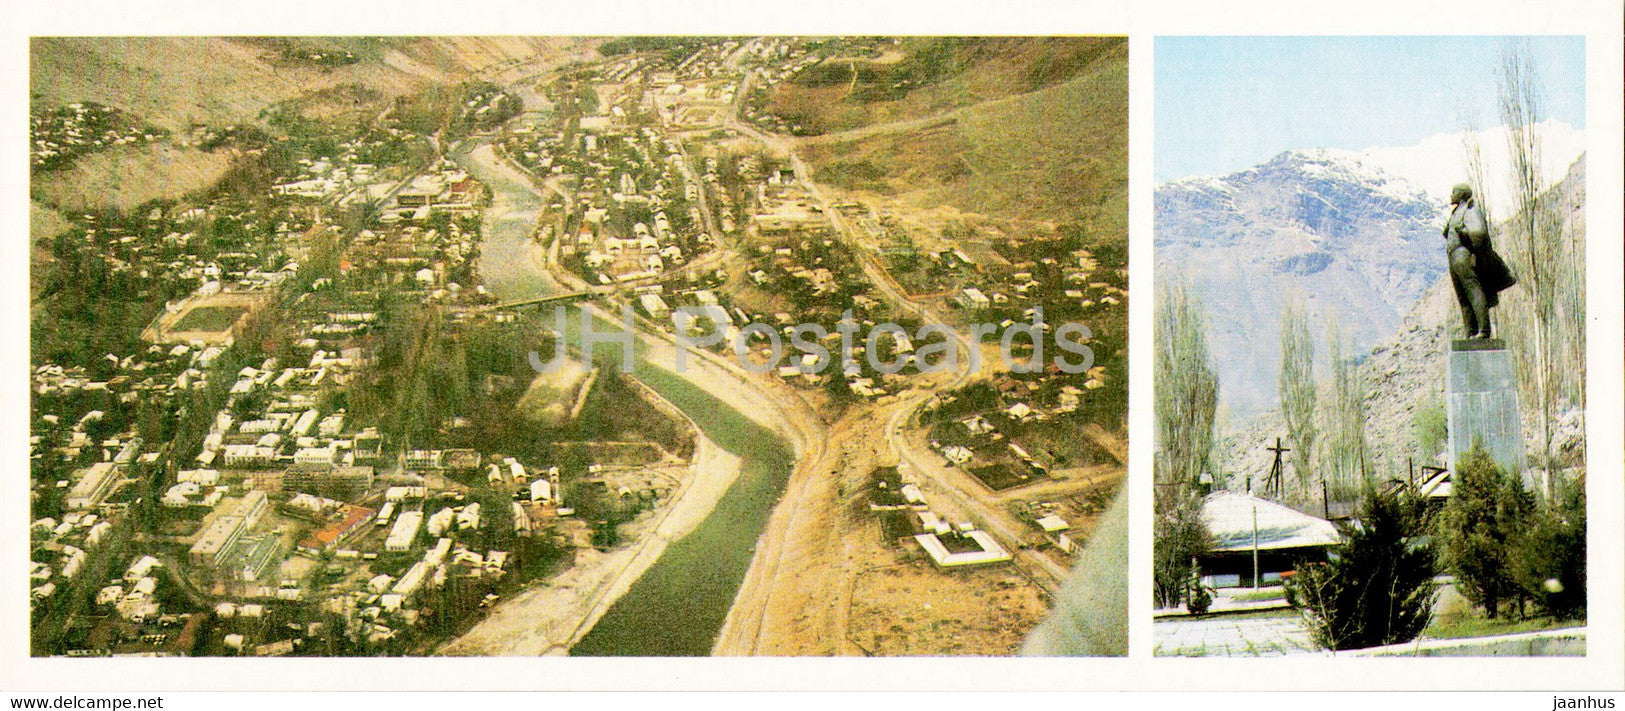 Pamir - Gorno-Badakhshan - Khorog - panorama - monument to Lenin - 1985 - Tajikistan USSR - unused - JH Postcards